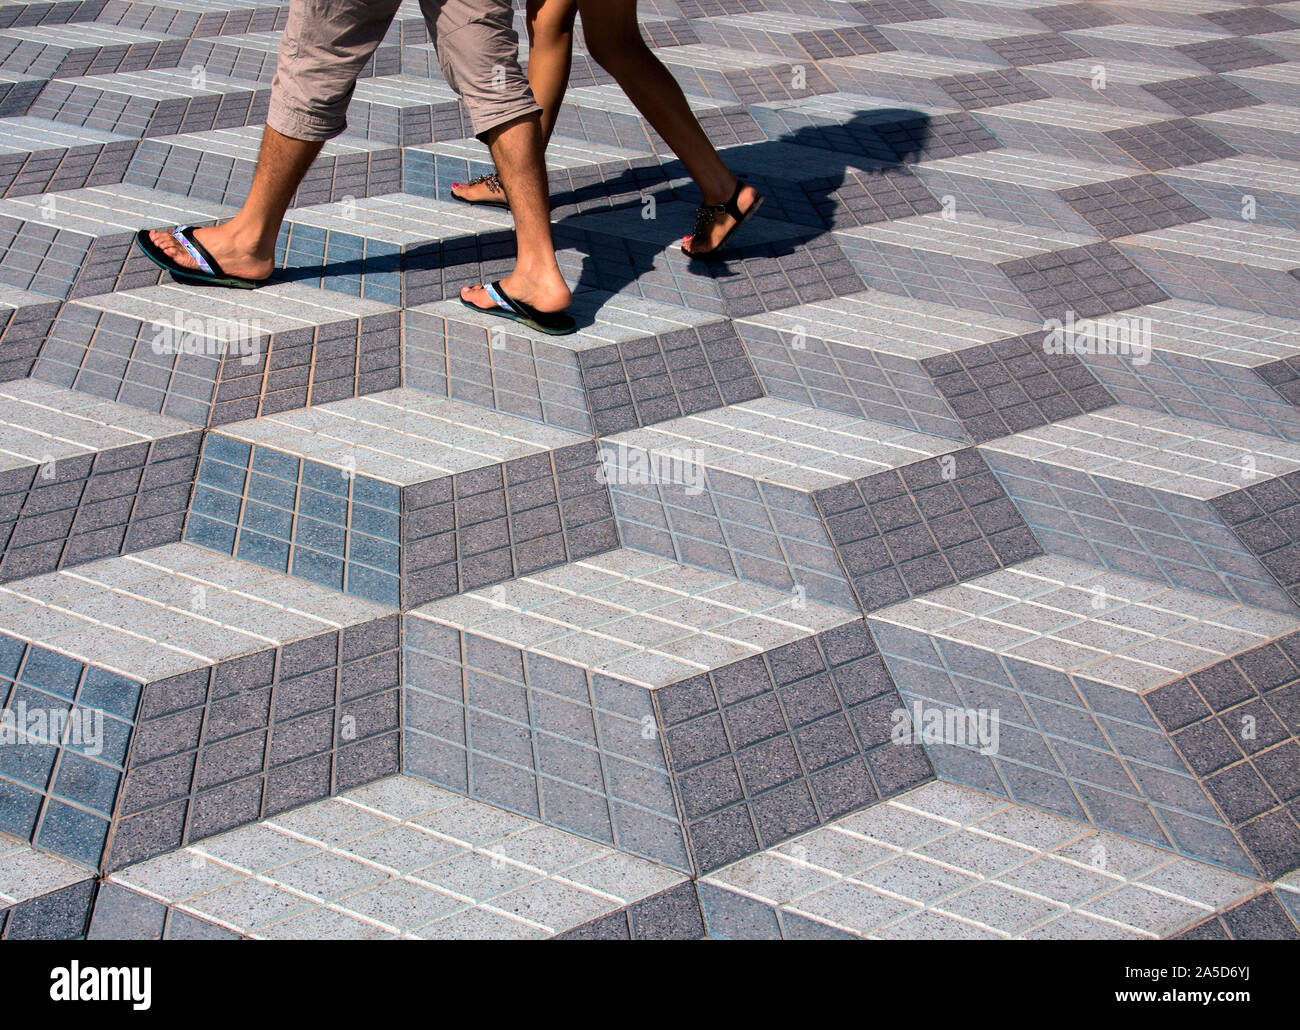 Alicane. Spain. 07.01.12. Floor tile design in the style of M.C. Escher in Alicante in the Costa Blanca region of Spain. Stock Photo